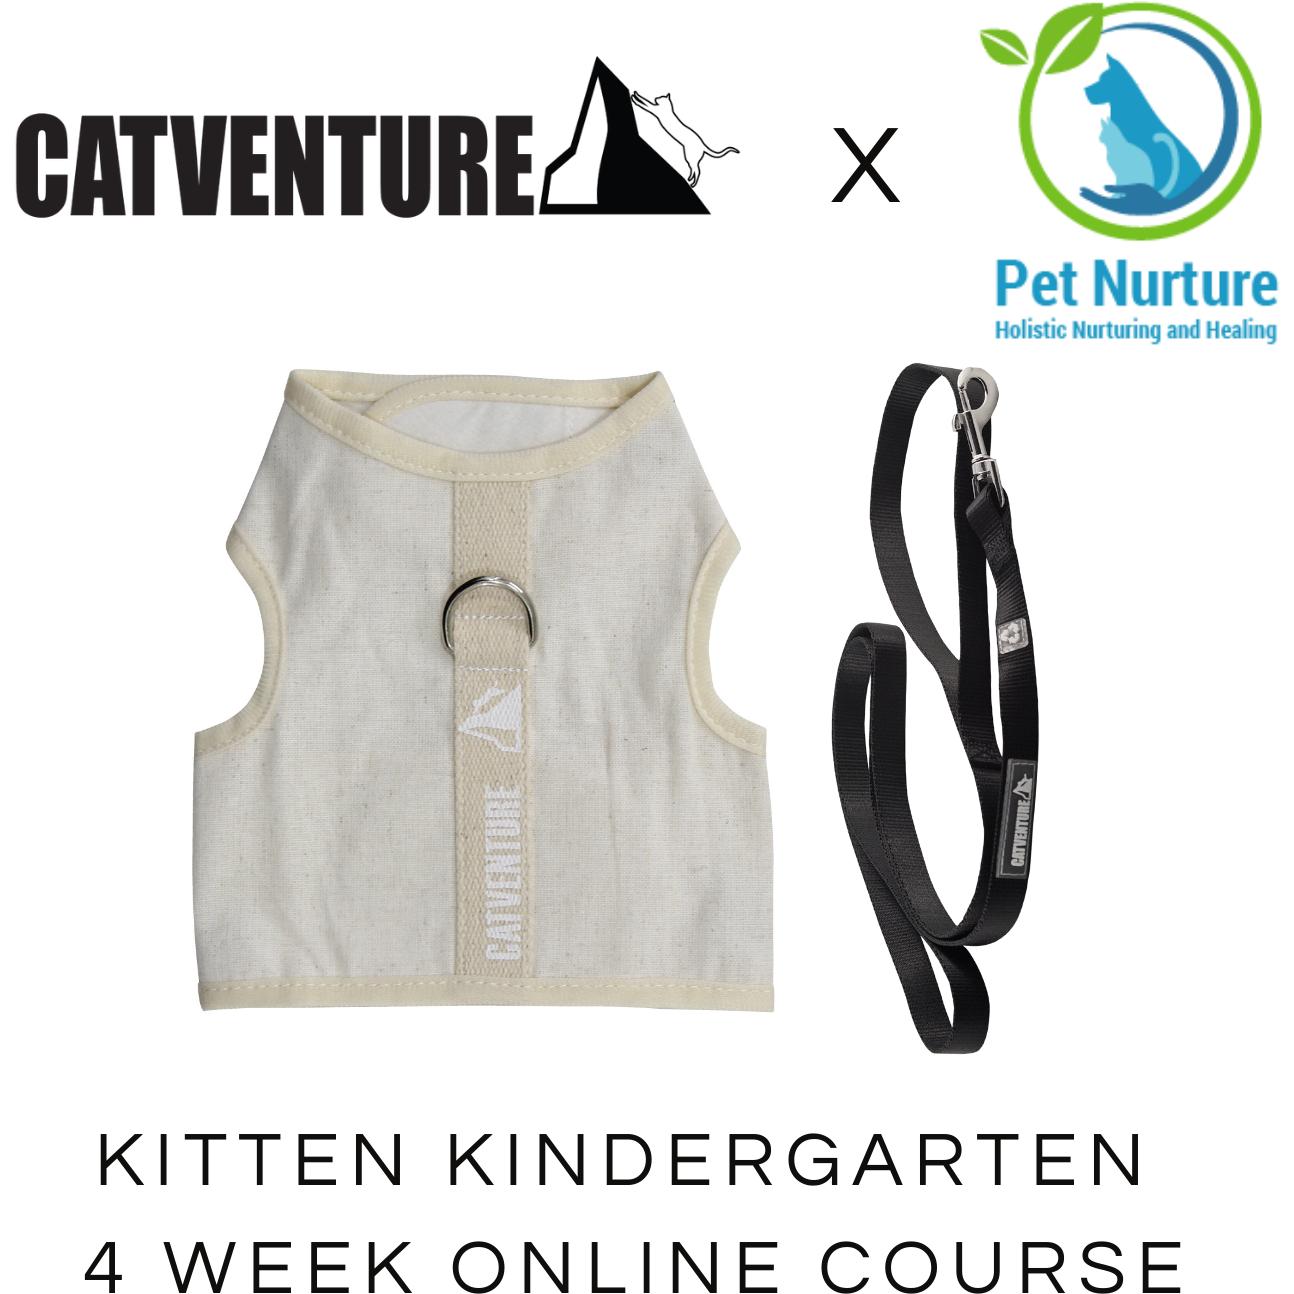 Natural Catventure escape proof kitten harness and black cat leash with Pet Nurture Kitten Kindergarten Bundle